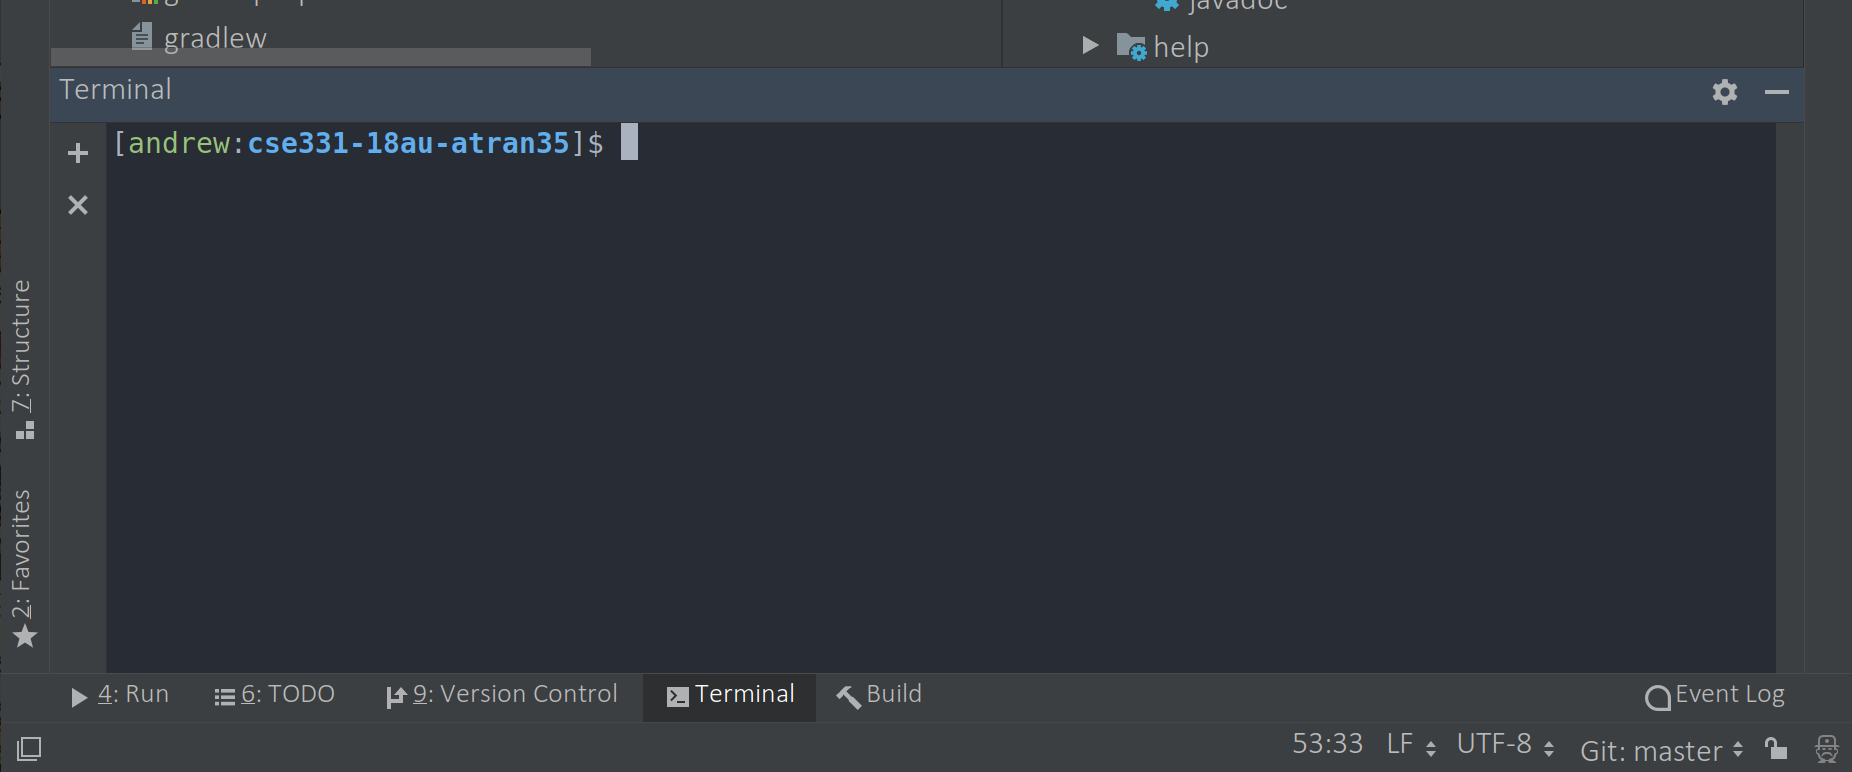 Screenshot: IntelliJ Terminal Tool Window